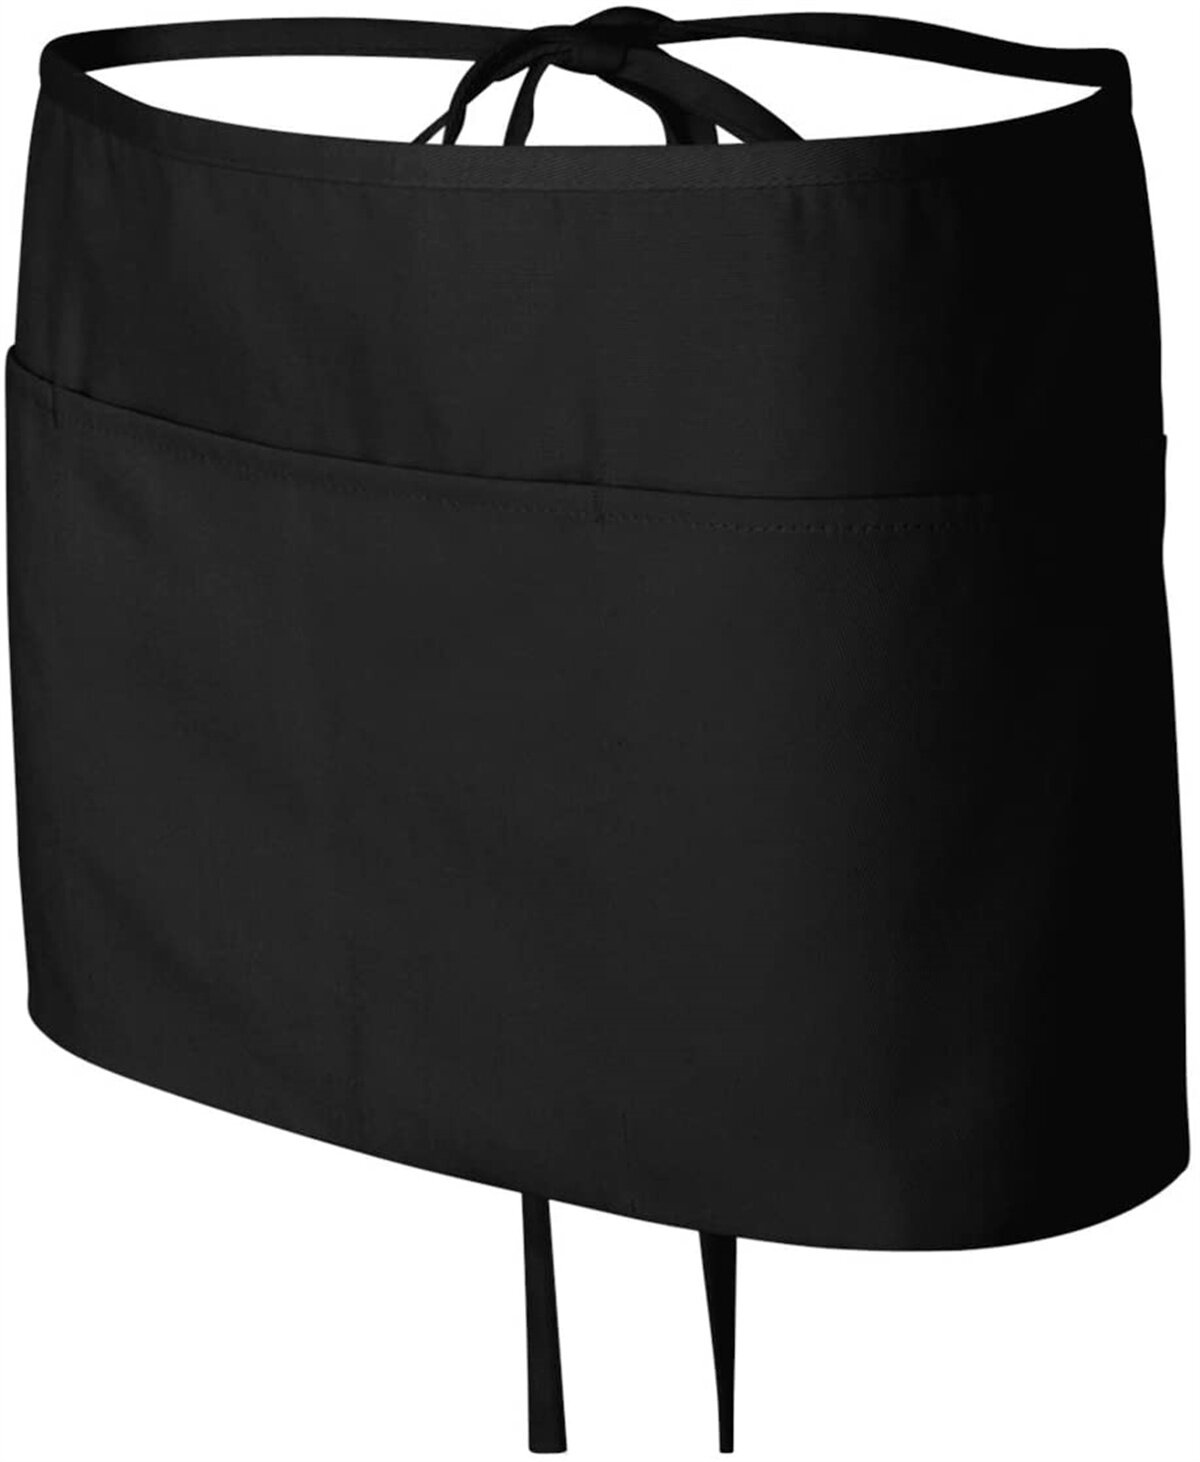 4 new waitress waiter server 3 pocket waist apron black 100% commercial grade! 